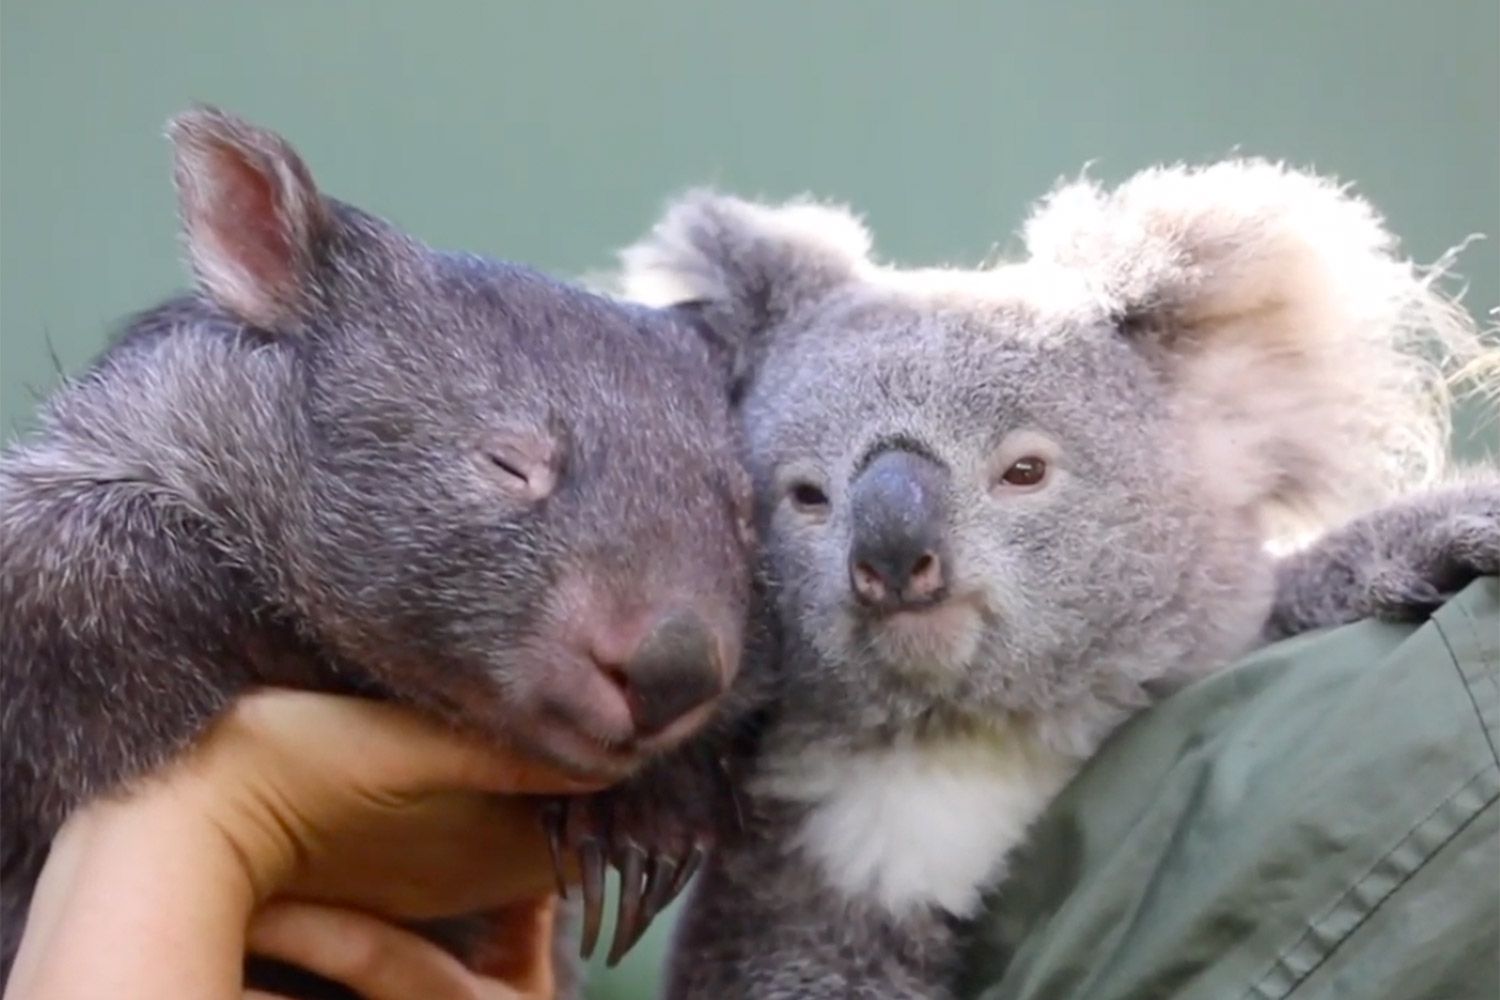 Hope the wombat and Elsa the koala